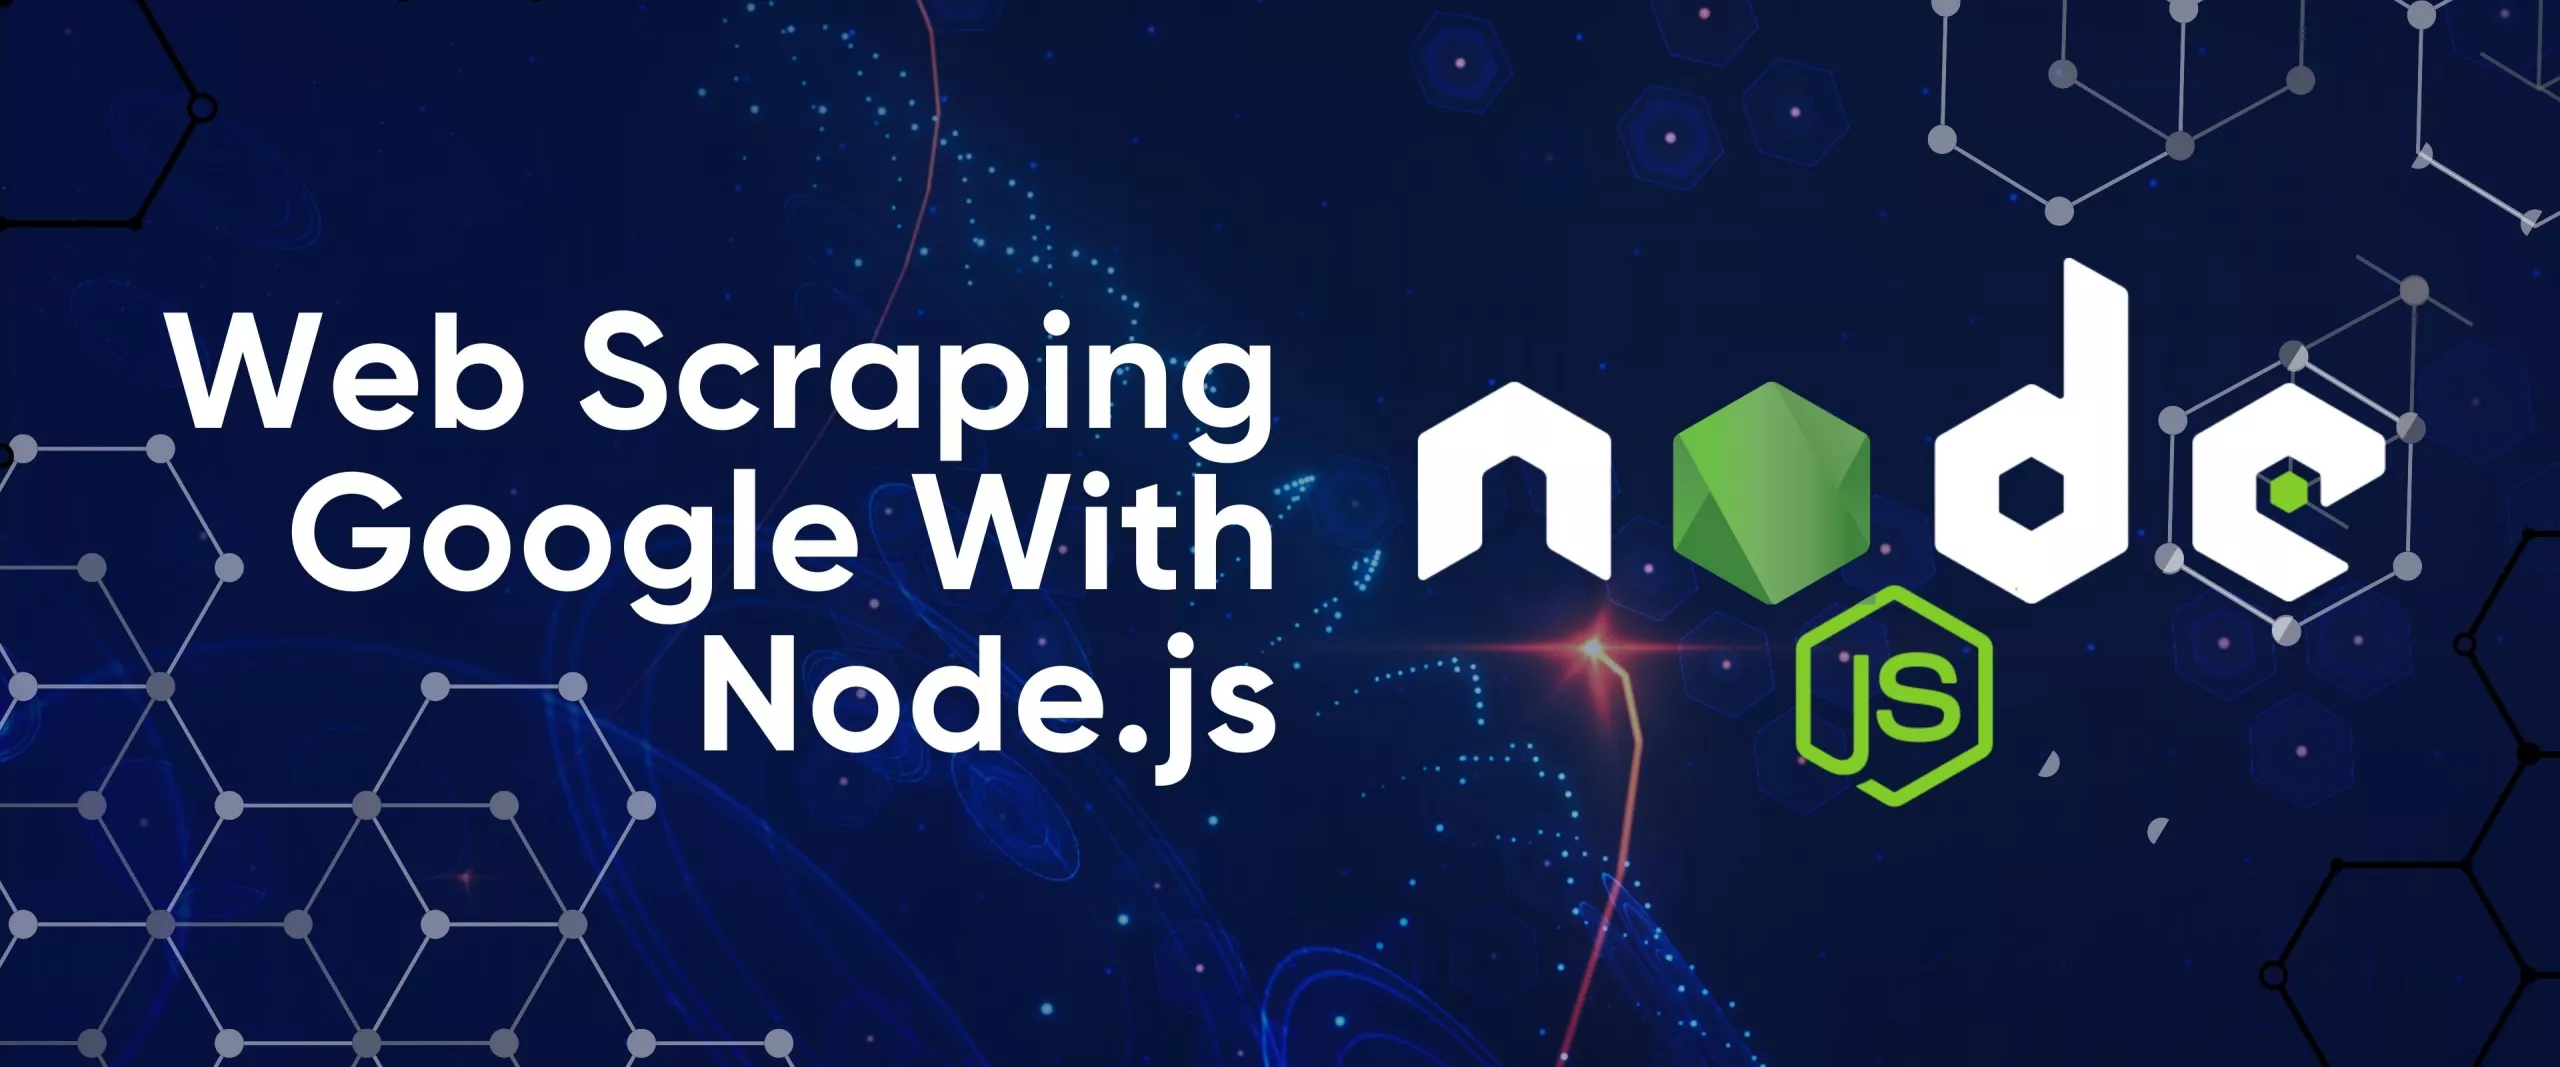 Web Scraping Google with Node JS